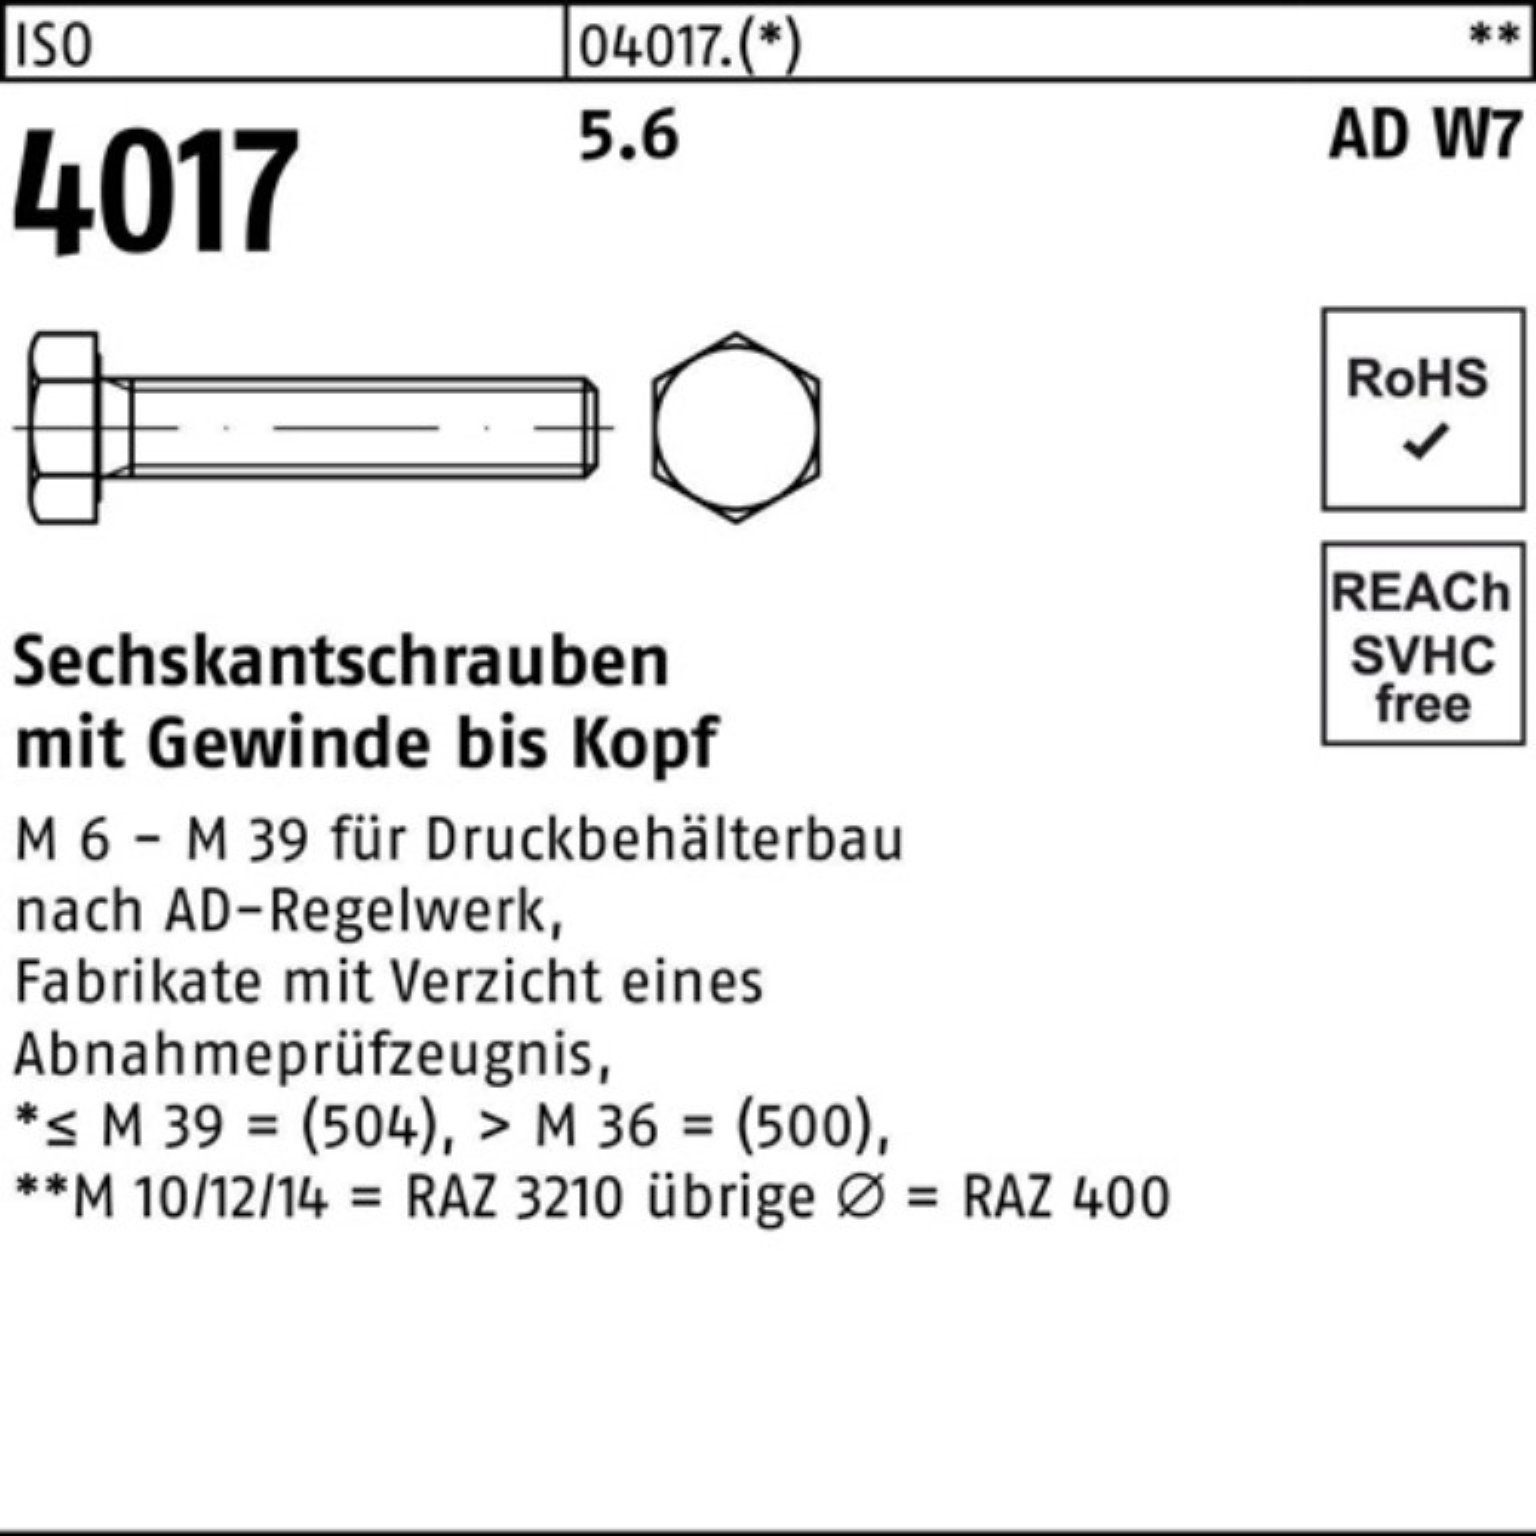 Bufab Sechskantschraube 100er Pack Sechskantschraube 5.6 4017 M36x Stück IS W7 ISO AD 50 VG 1